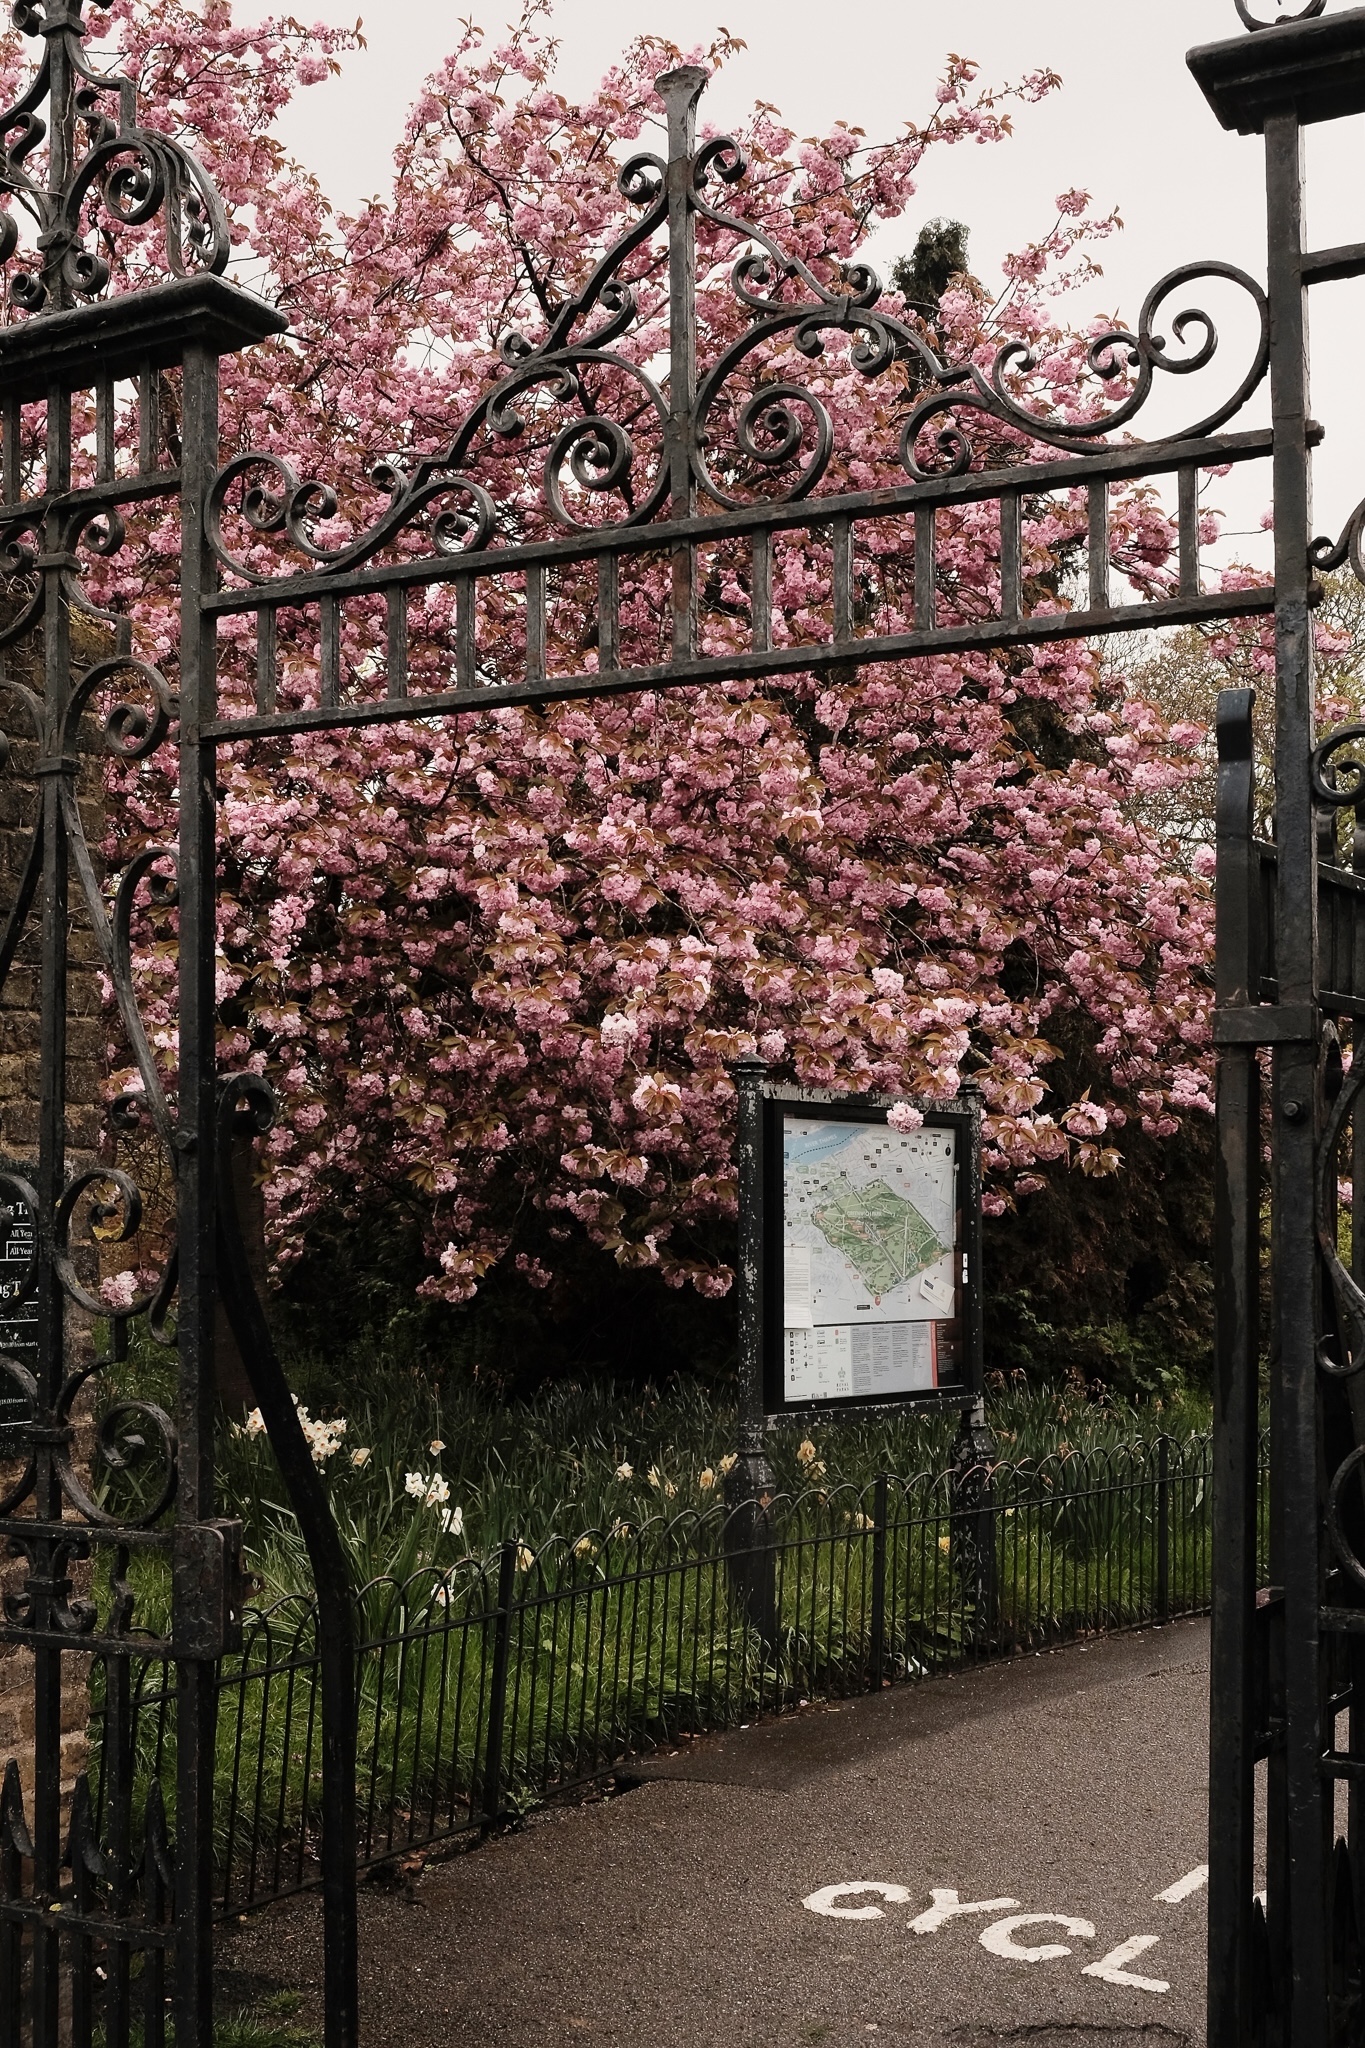 Cherry blossom tree framed by an ornate steel black gate